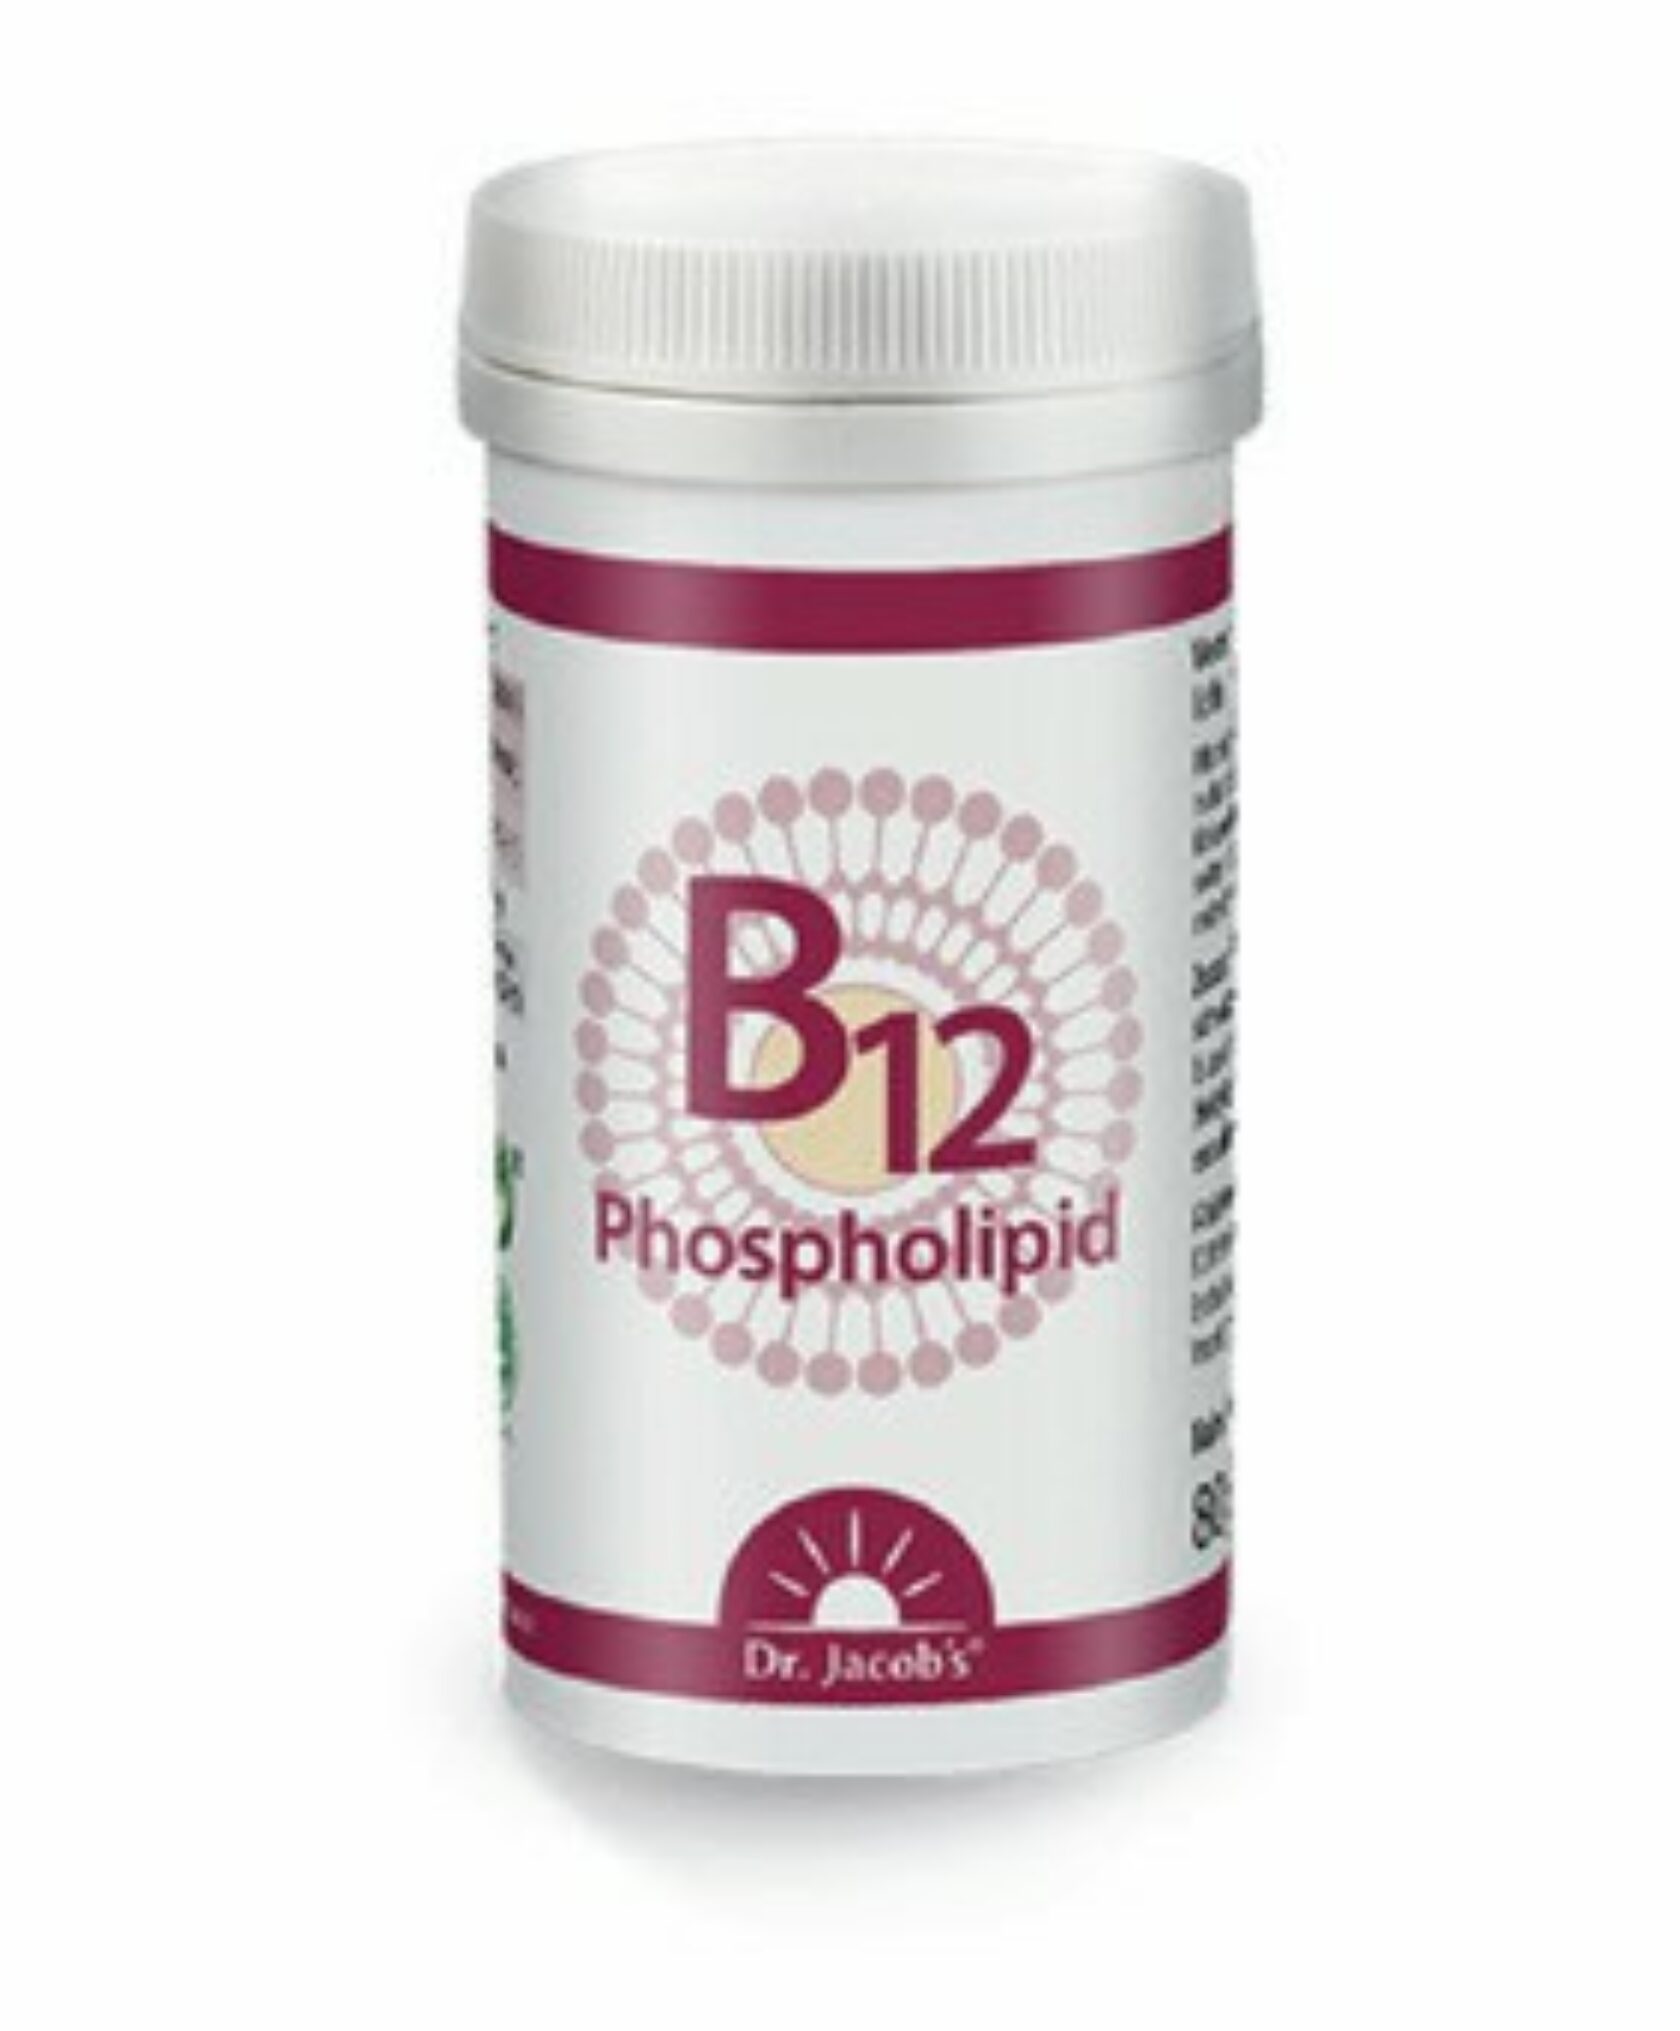 Produktpackung von B12 Phospholipid Jacob's